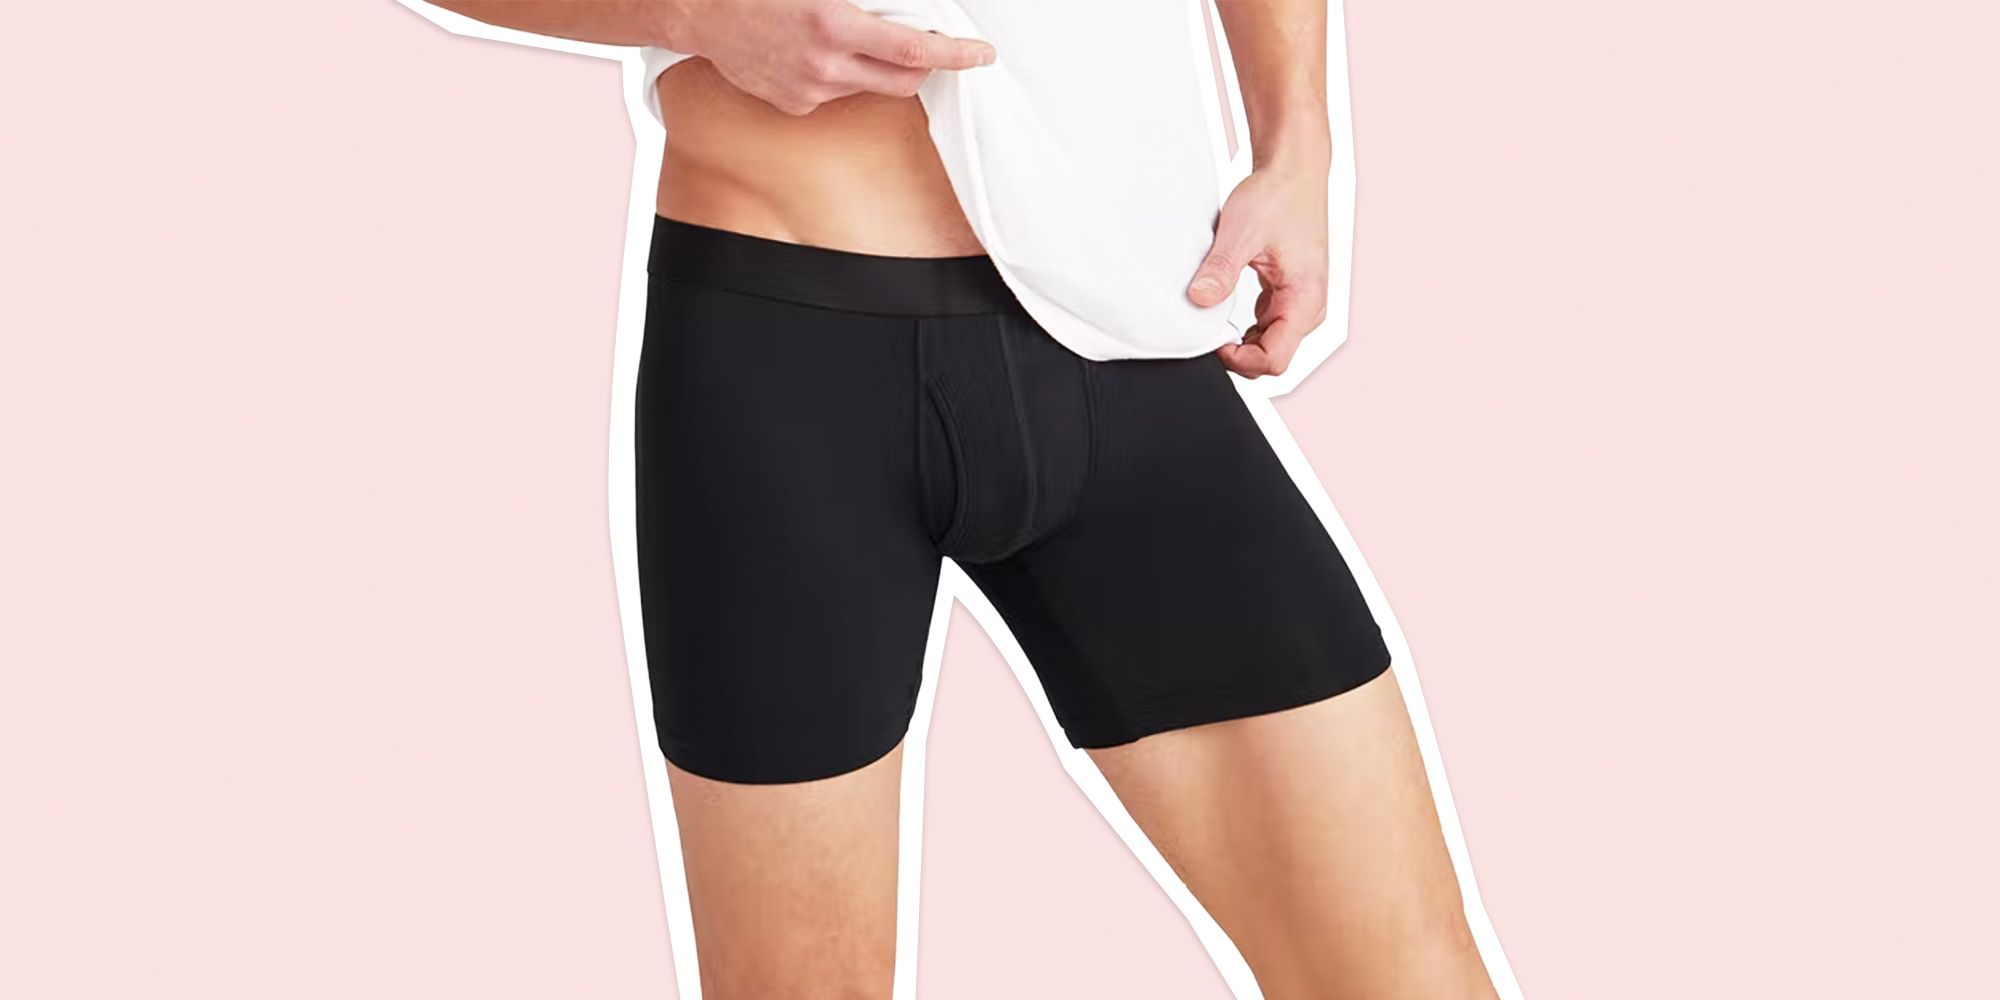 comfortable mens cotton underwear striped boxer trunks sports shorts underpants